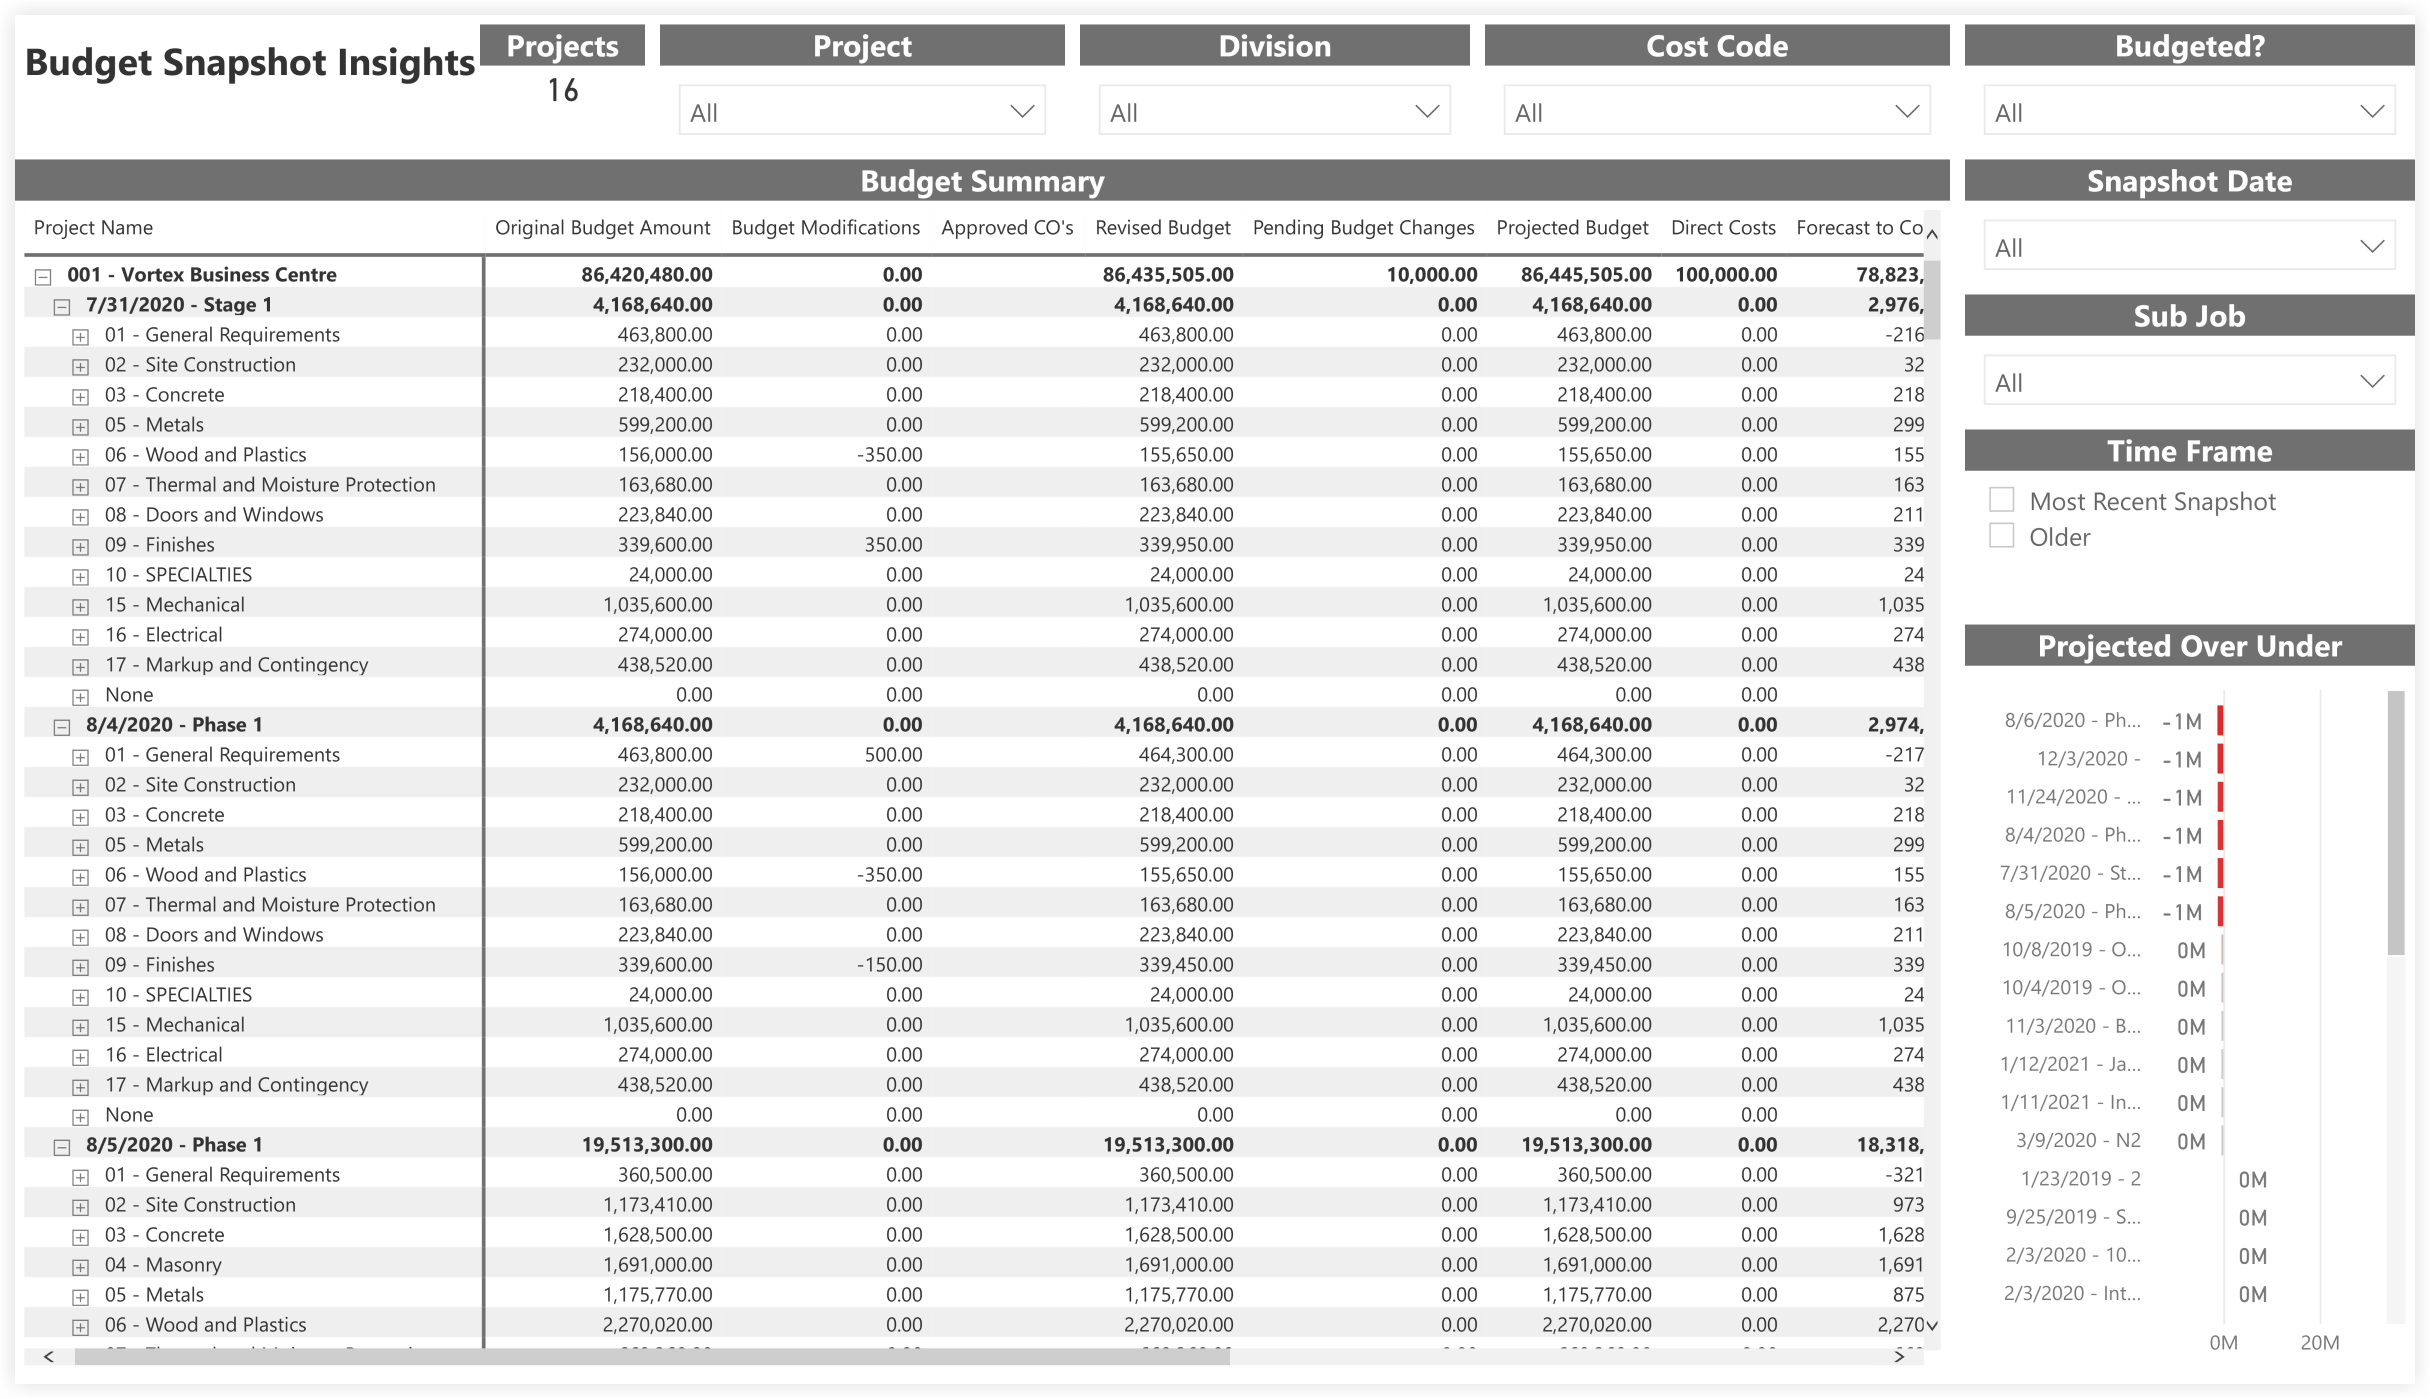 procore-analytics-financials-budget-budget-snapshot-insights.png